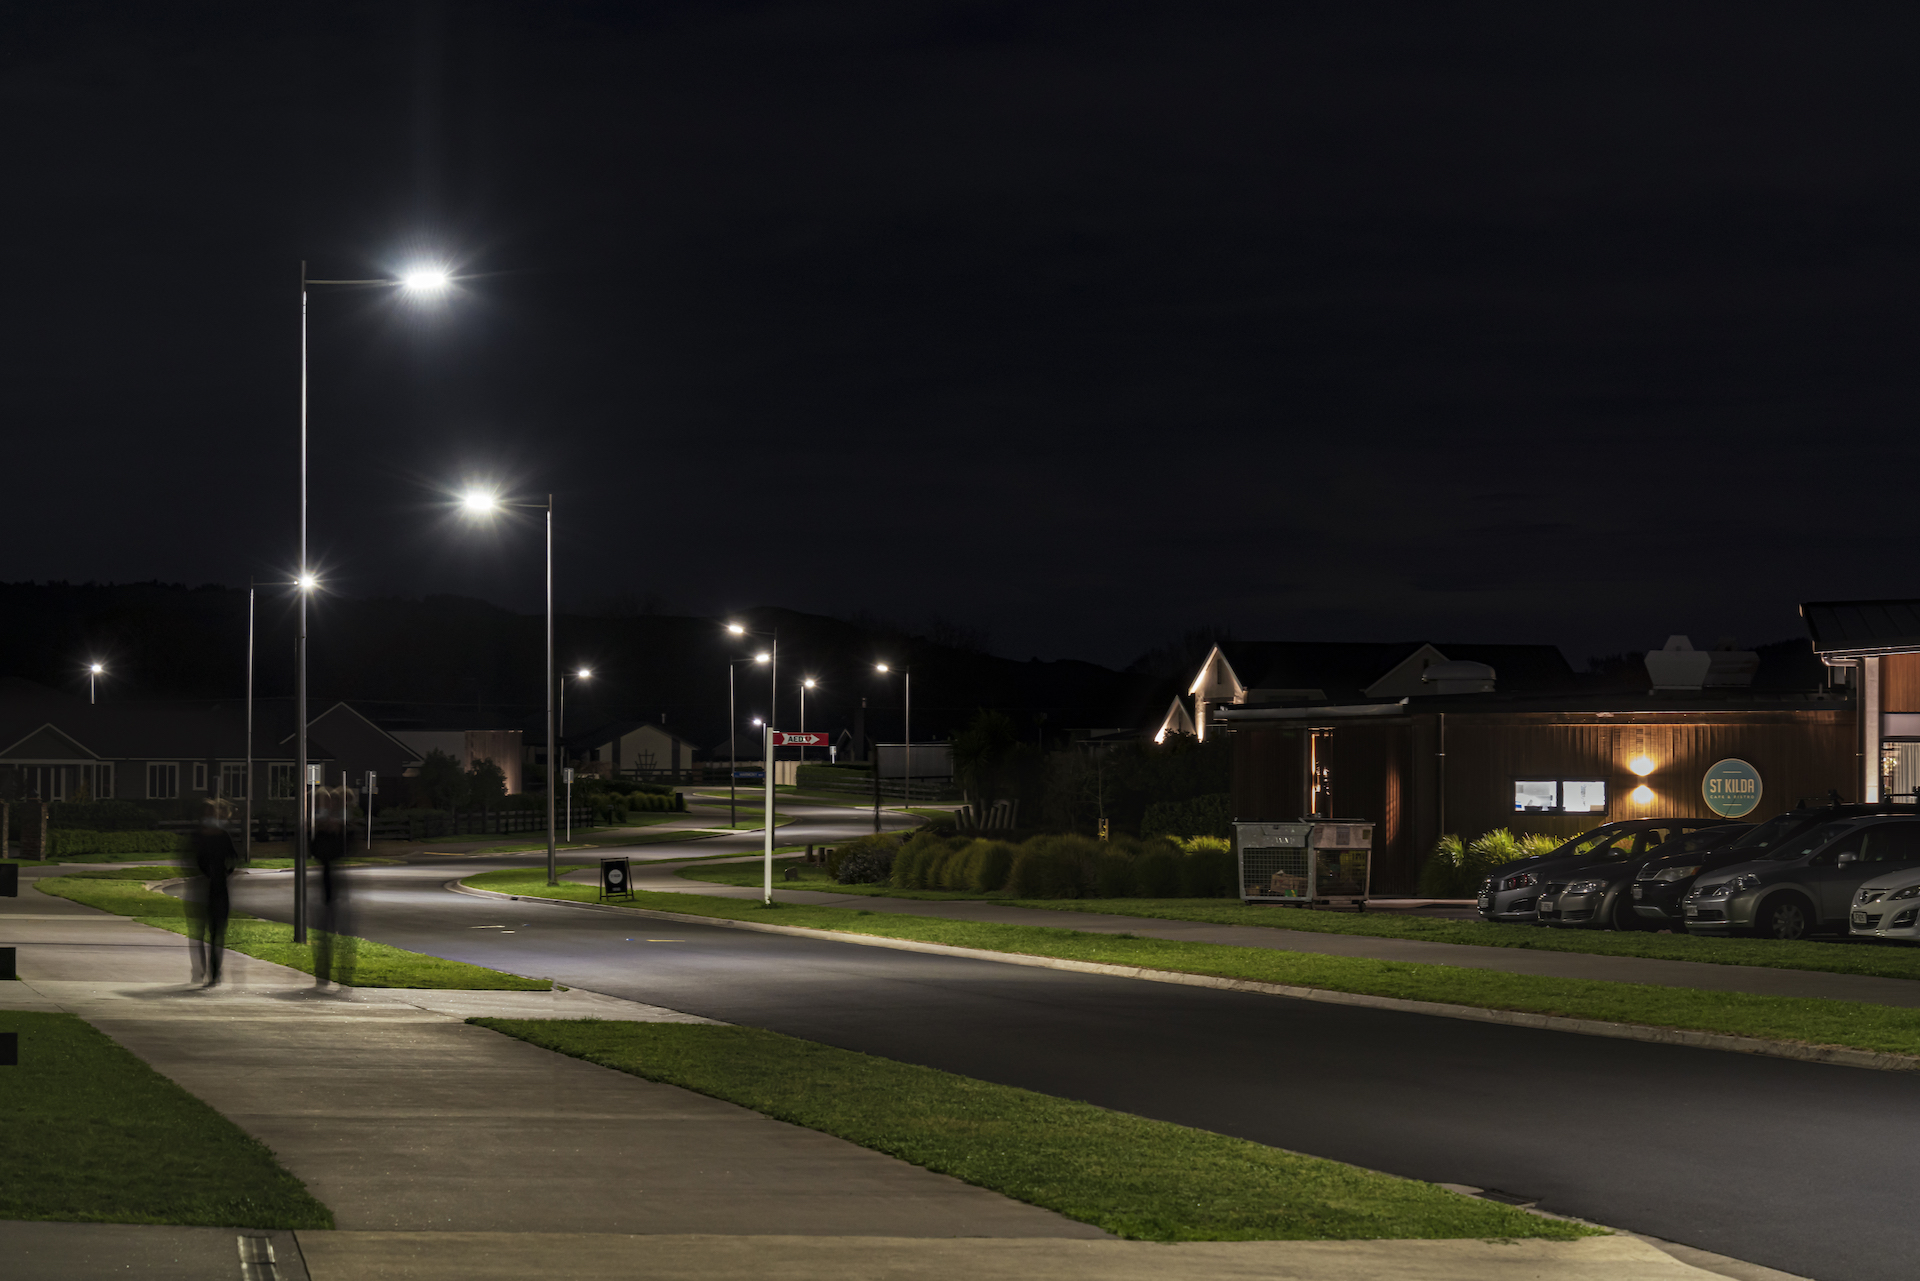 St Kilda sidewalk at night illuminated by ibex lighting solutions.